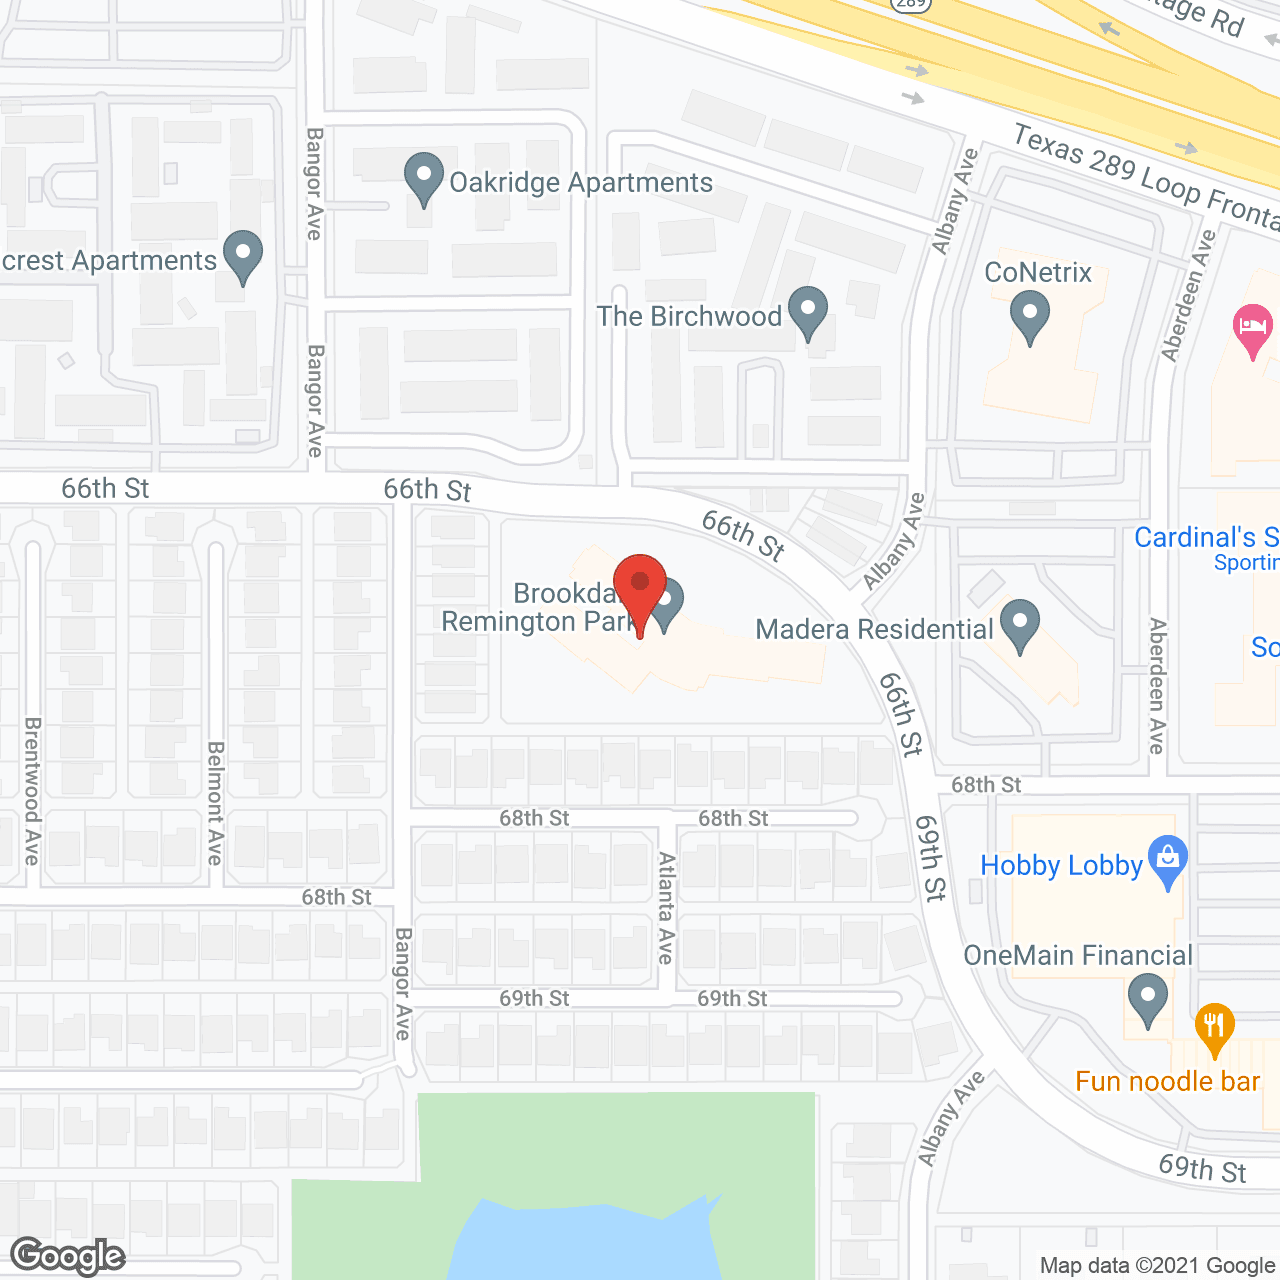 Brookdale Remington Park in google map